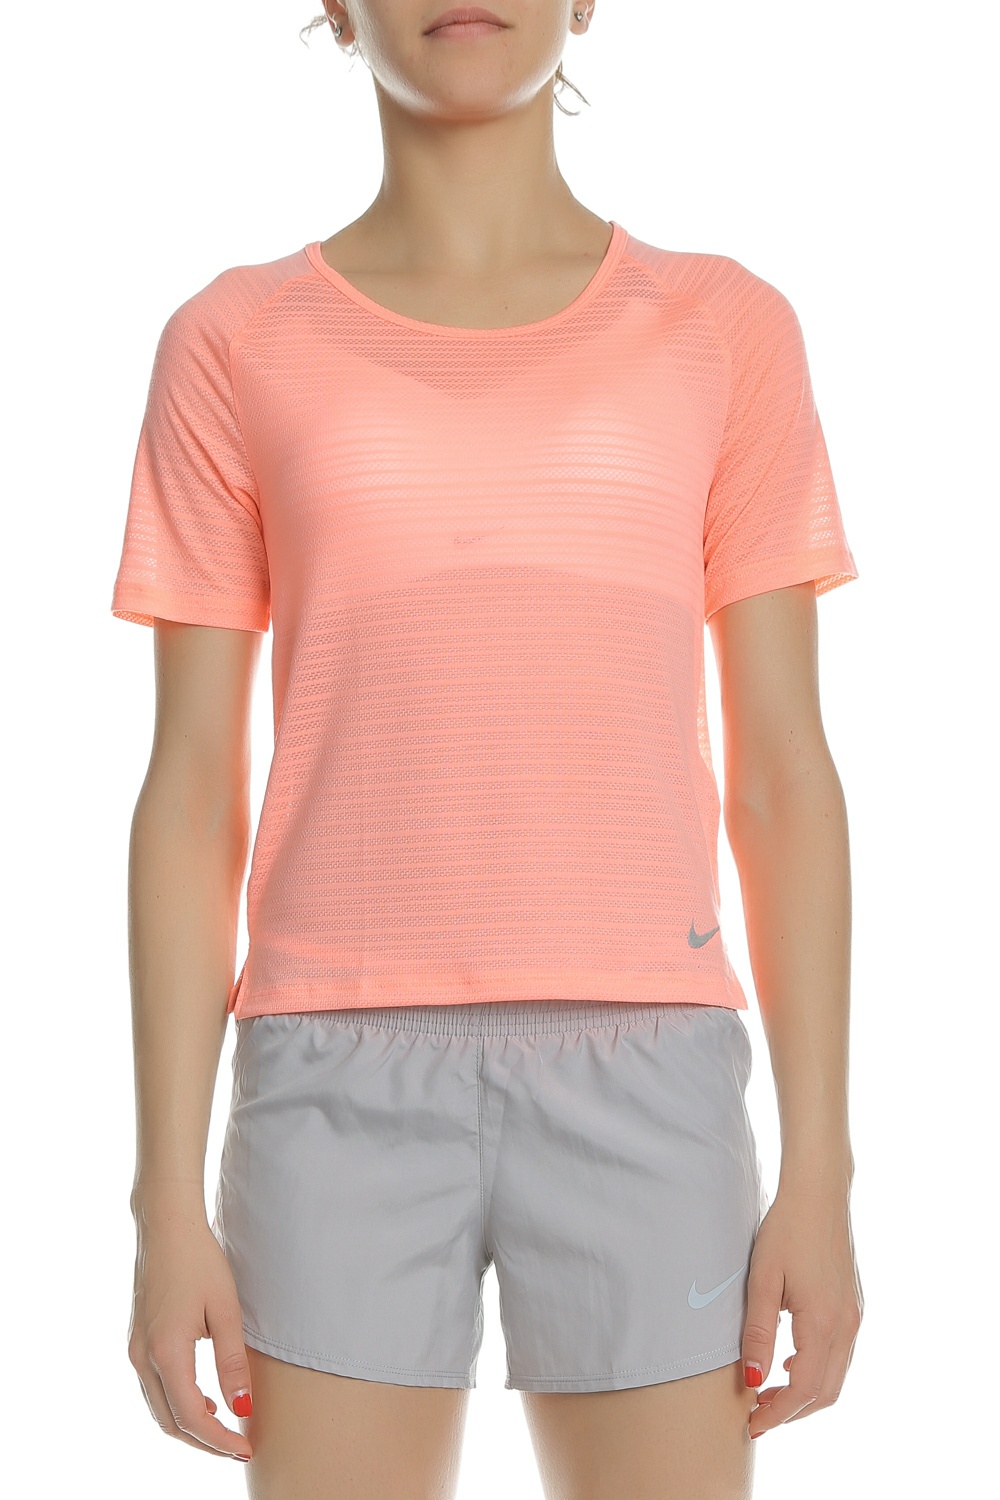 NIKE - Γυναικεία κοντομάνικη μπλούζα NIKE MILER TOP SS BREATHE ροζ Γυναικεία/Ρούχα/Αθλητικά/T-shirt-Τοπ